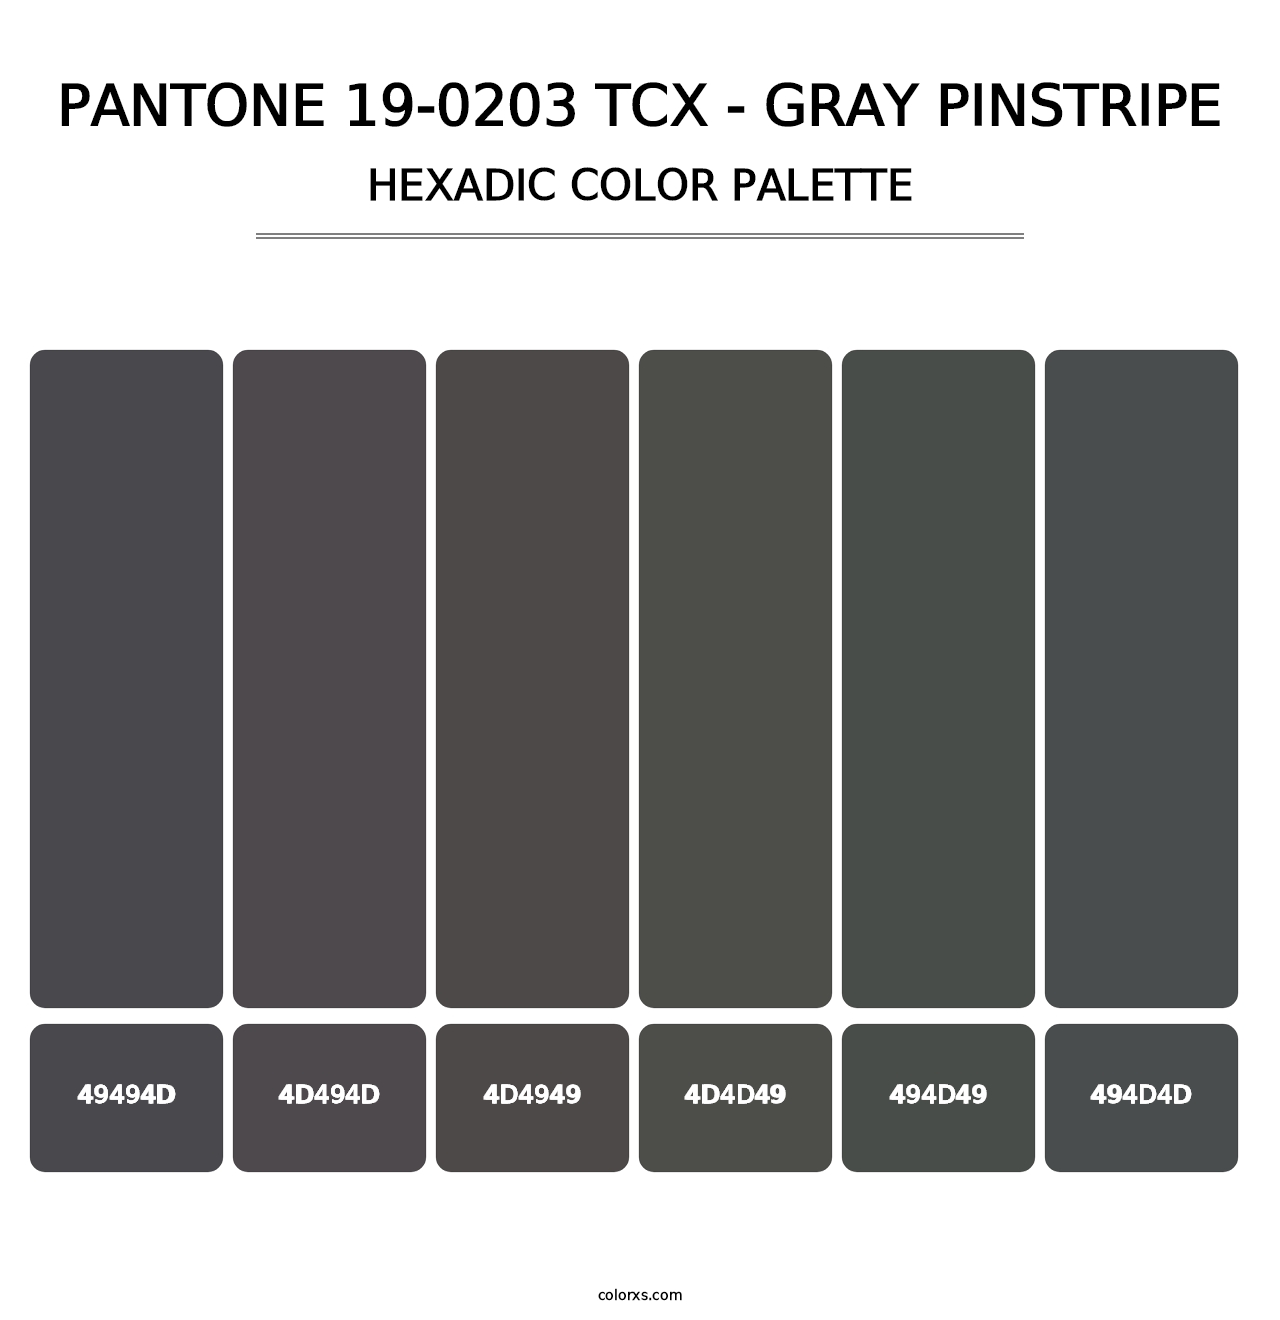 PANTONE 19-0203 TCX - Gray Pinstripe - Hexadic Color Palette